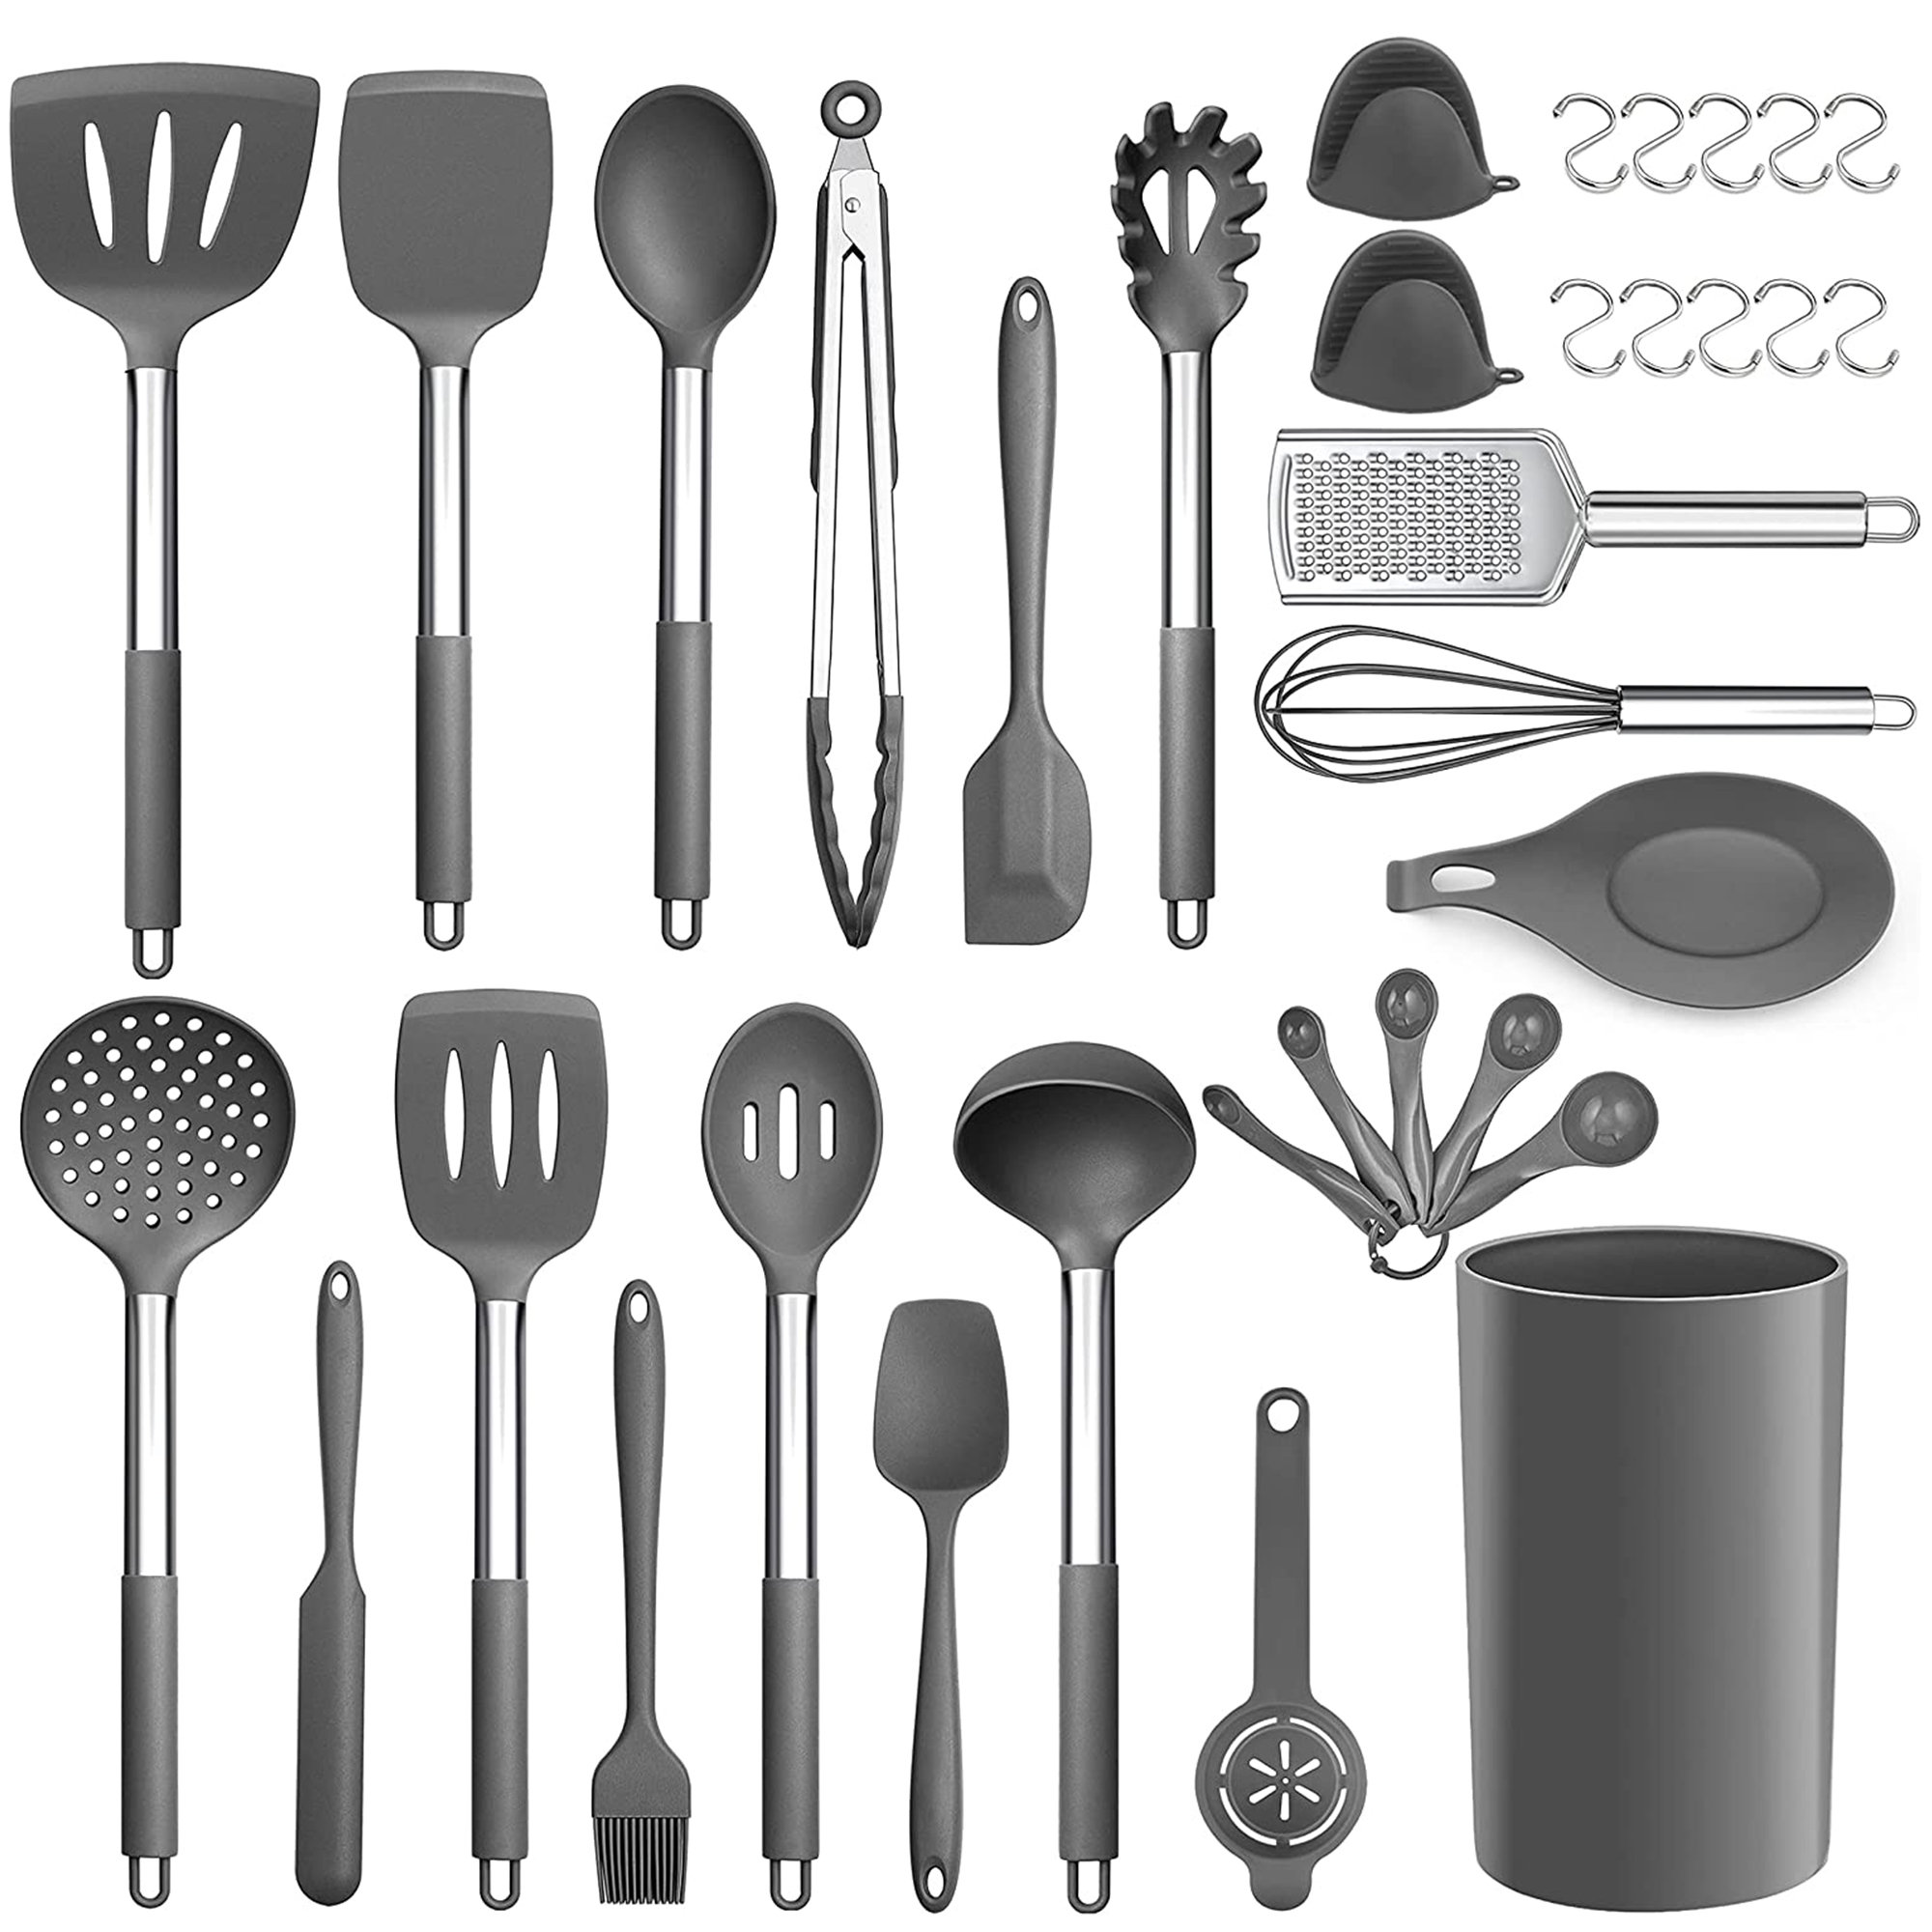  KitchenAid Tool and Gadget Set with Crock, 6-Piece, Aqua: Home  & Kitchen